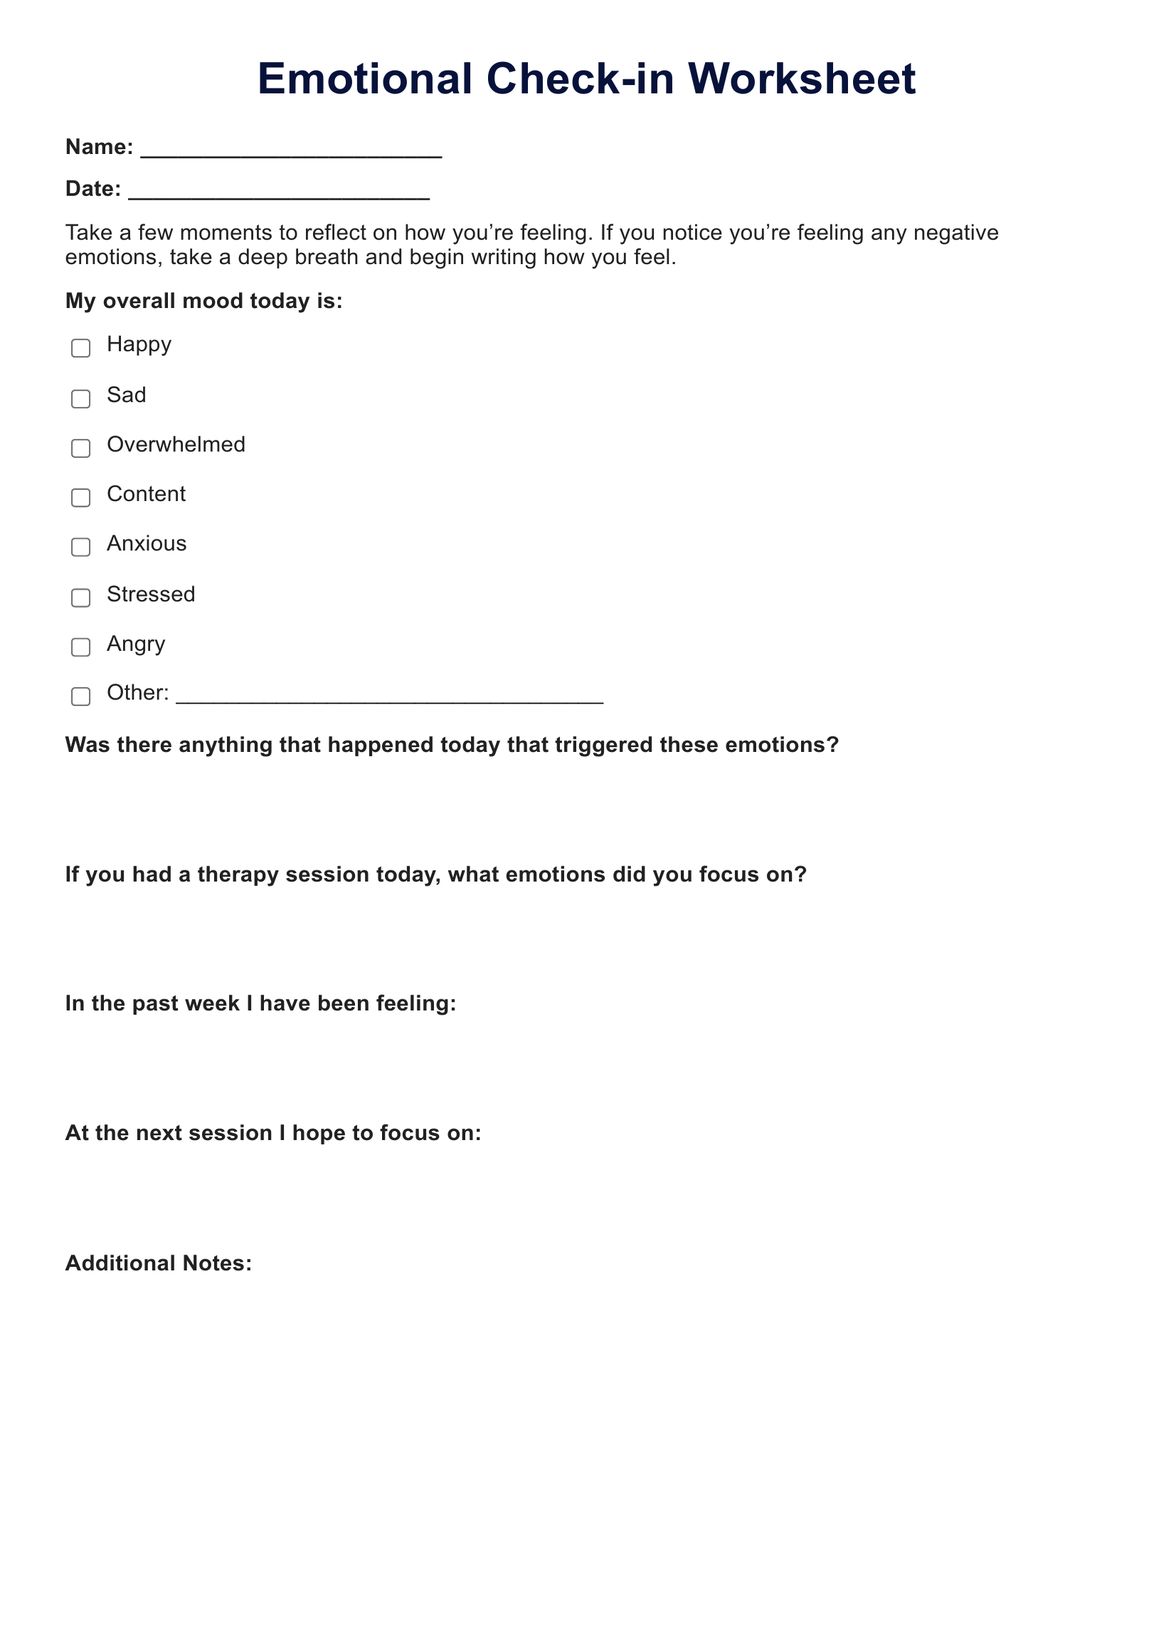 Emotional Check In Worksheet PDF Example